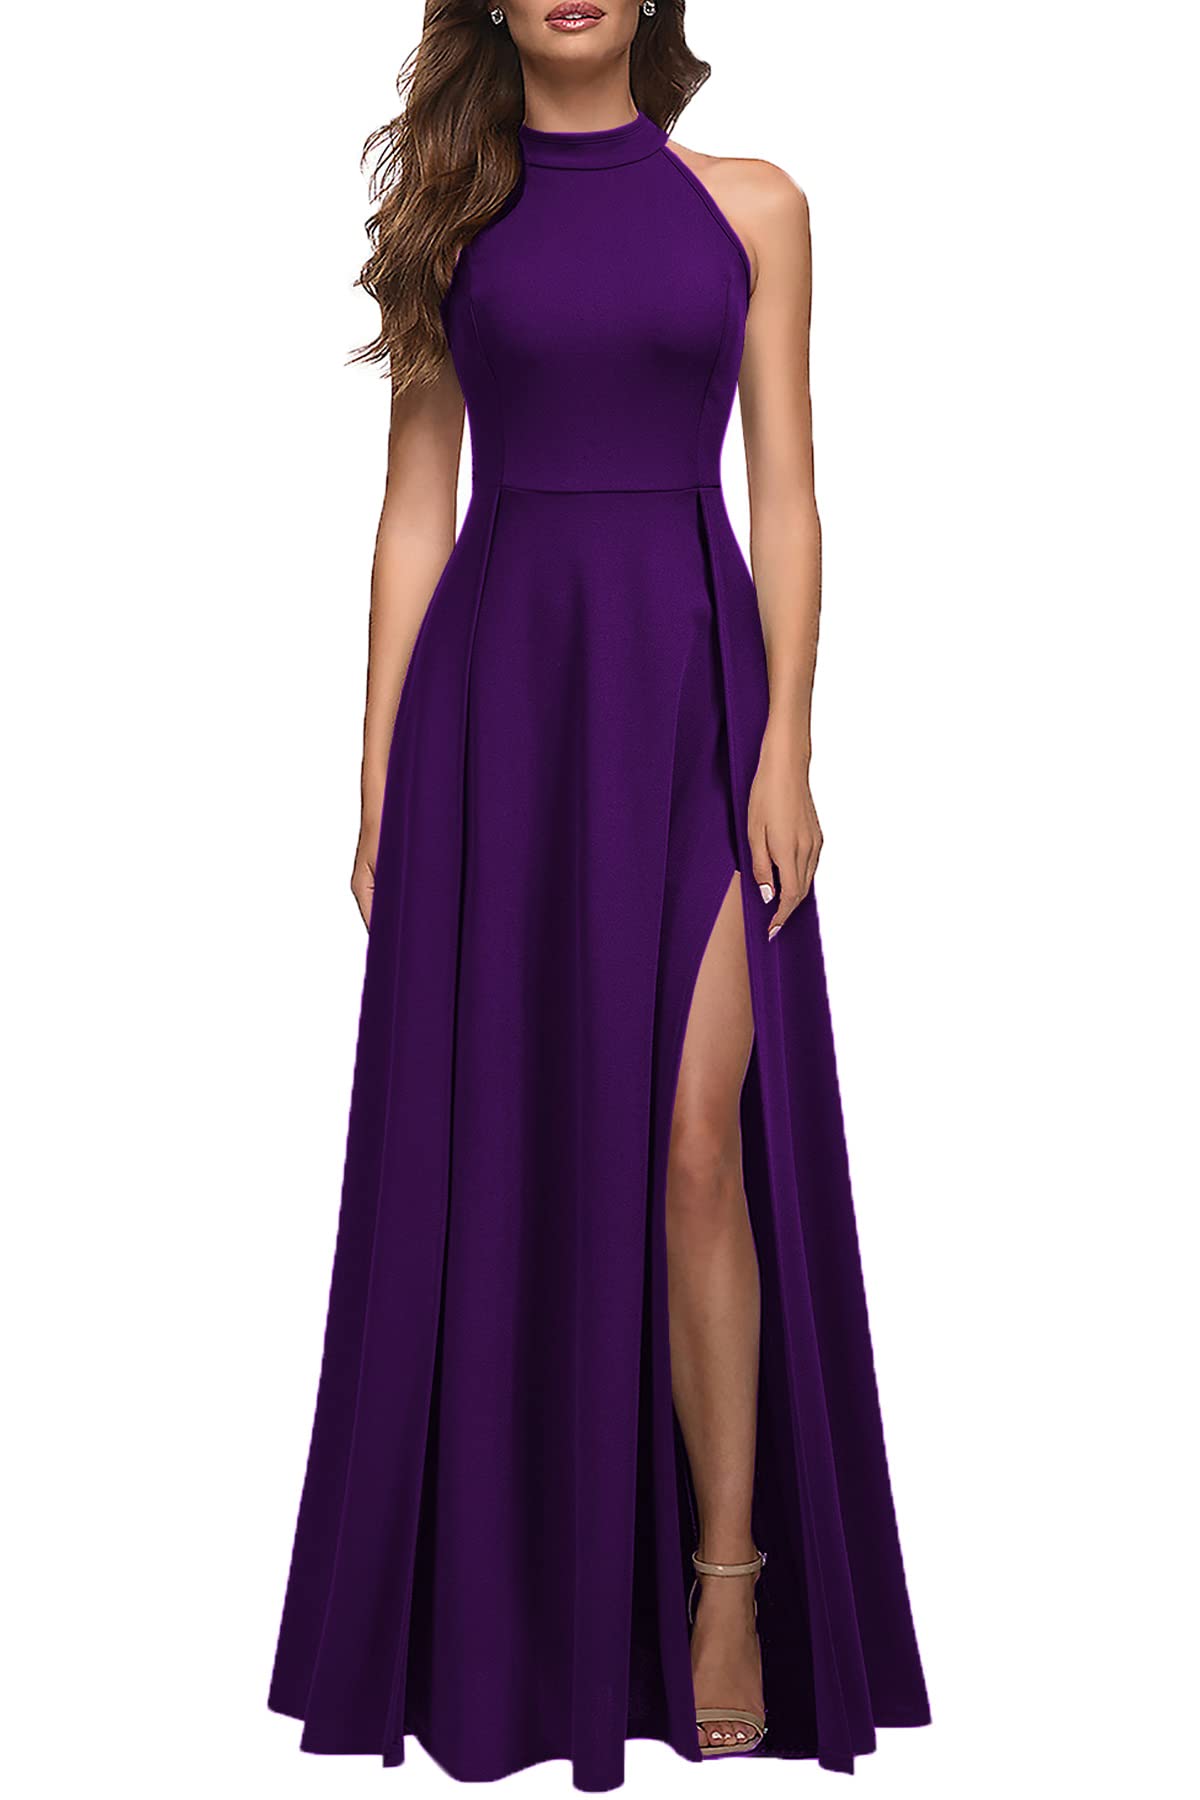 Purple Prom Dress 7